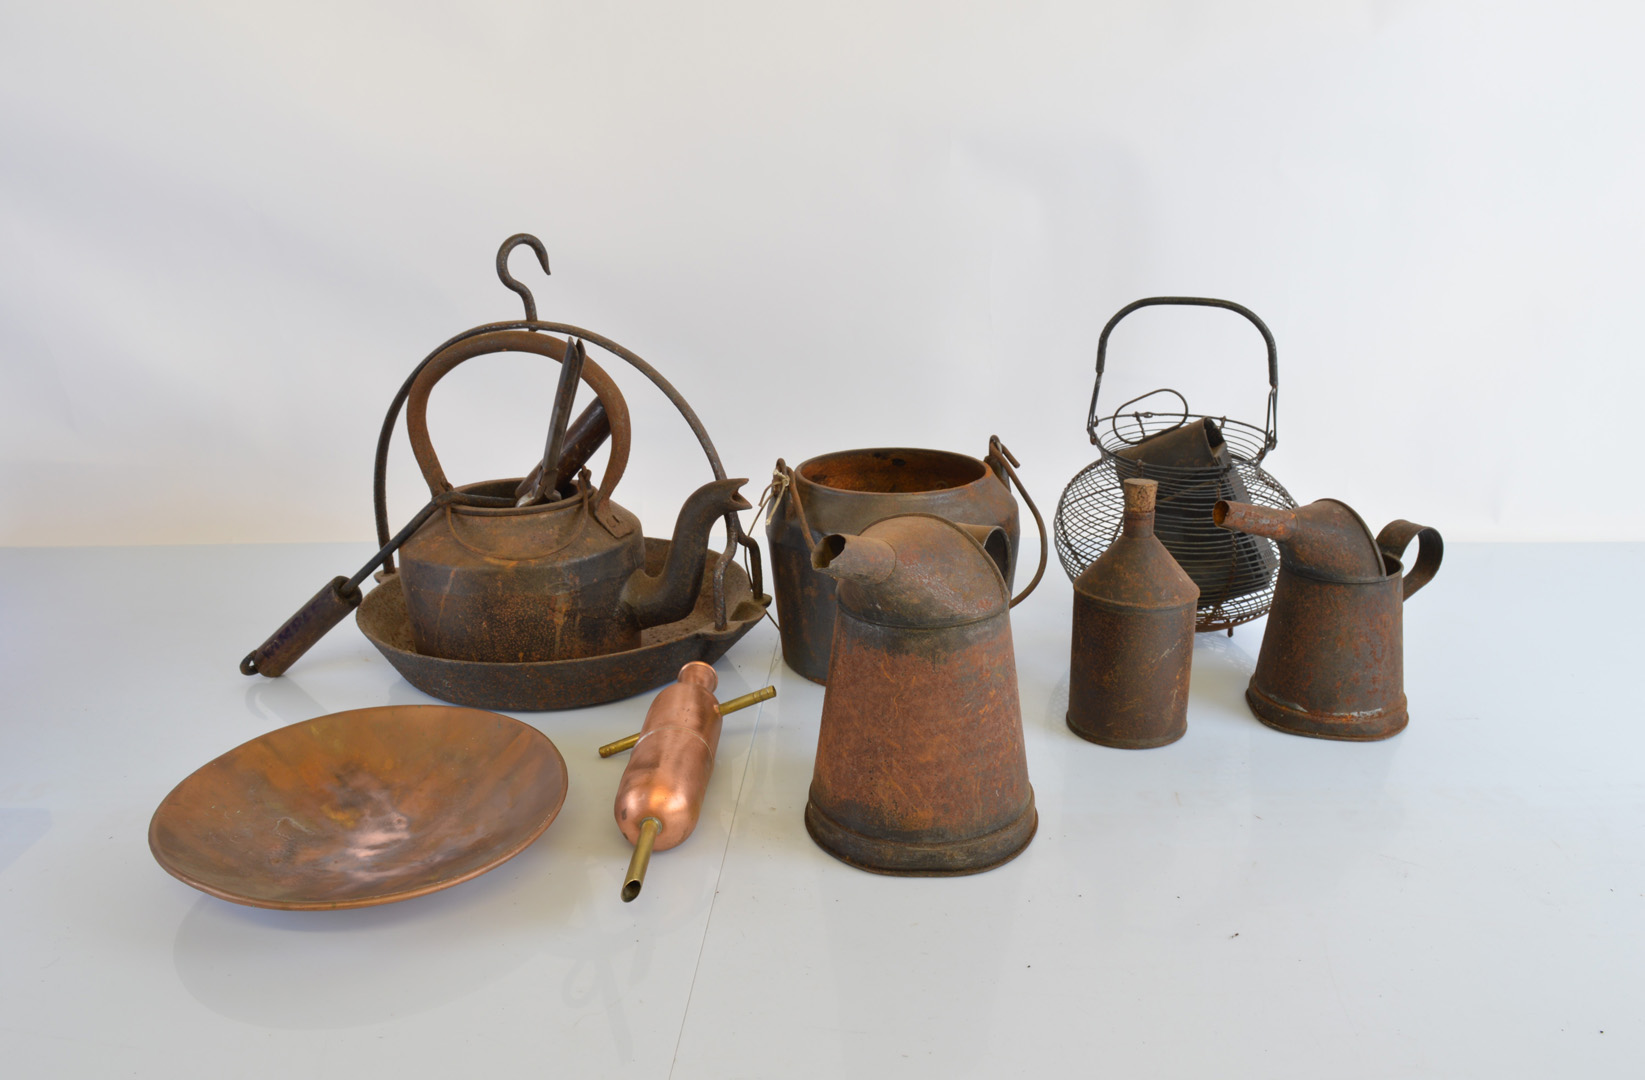 An Edwardian wirework egg basket, various glue pots, a stook wimple, various heating irons, oil jugs